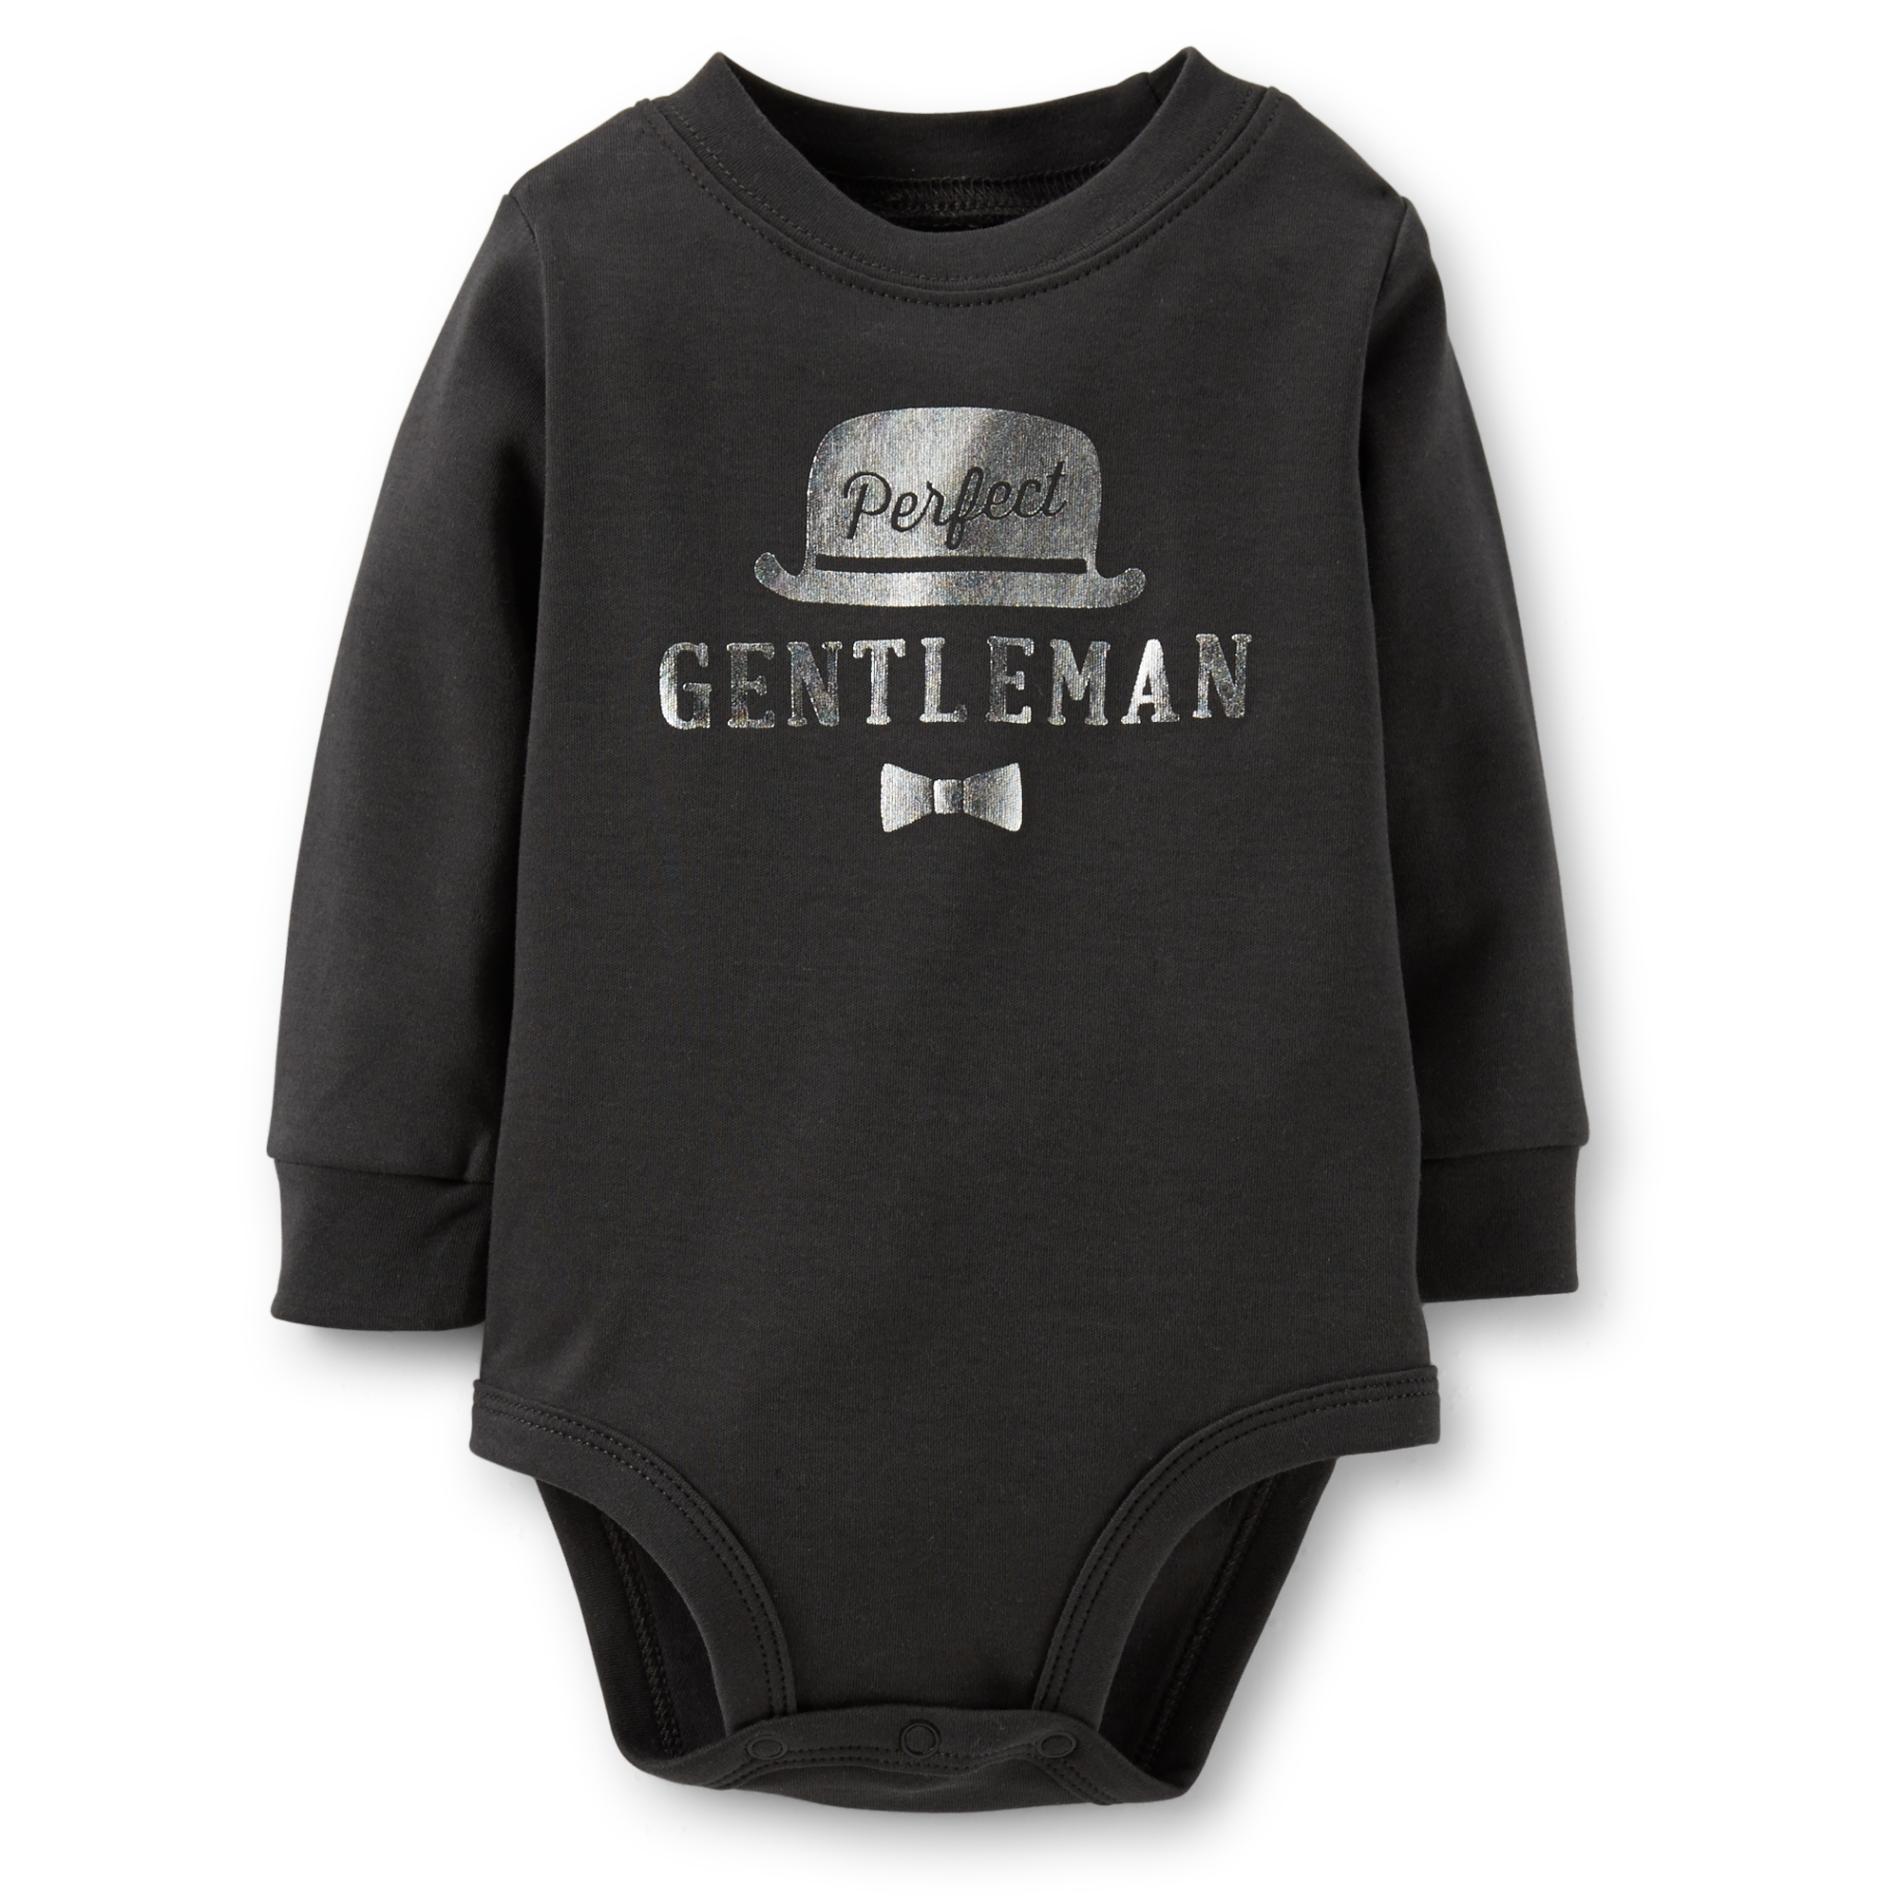 Carter's Newborn & Infant Boy's Long-Sleeve Bodysuit - Perfect Gentleman